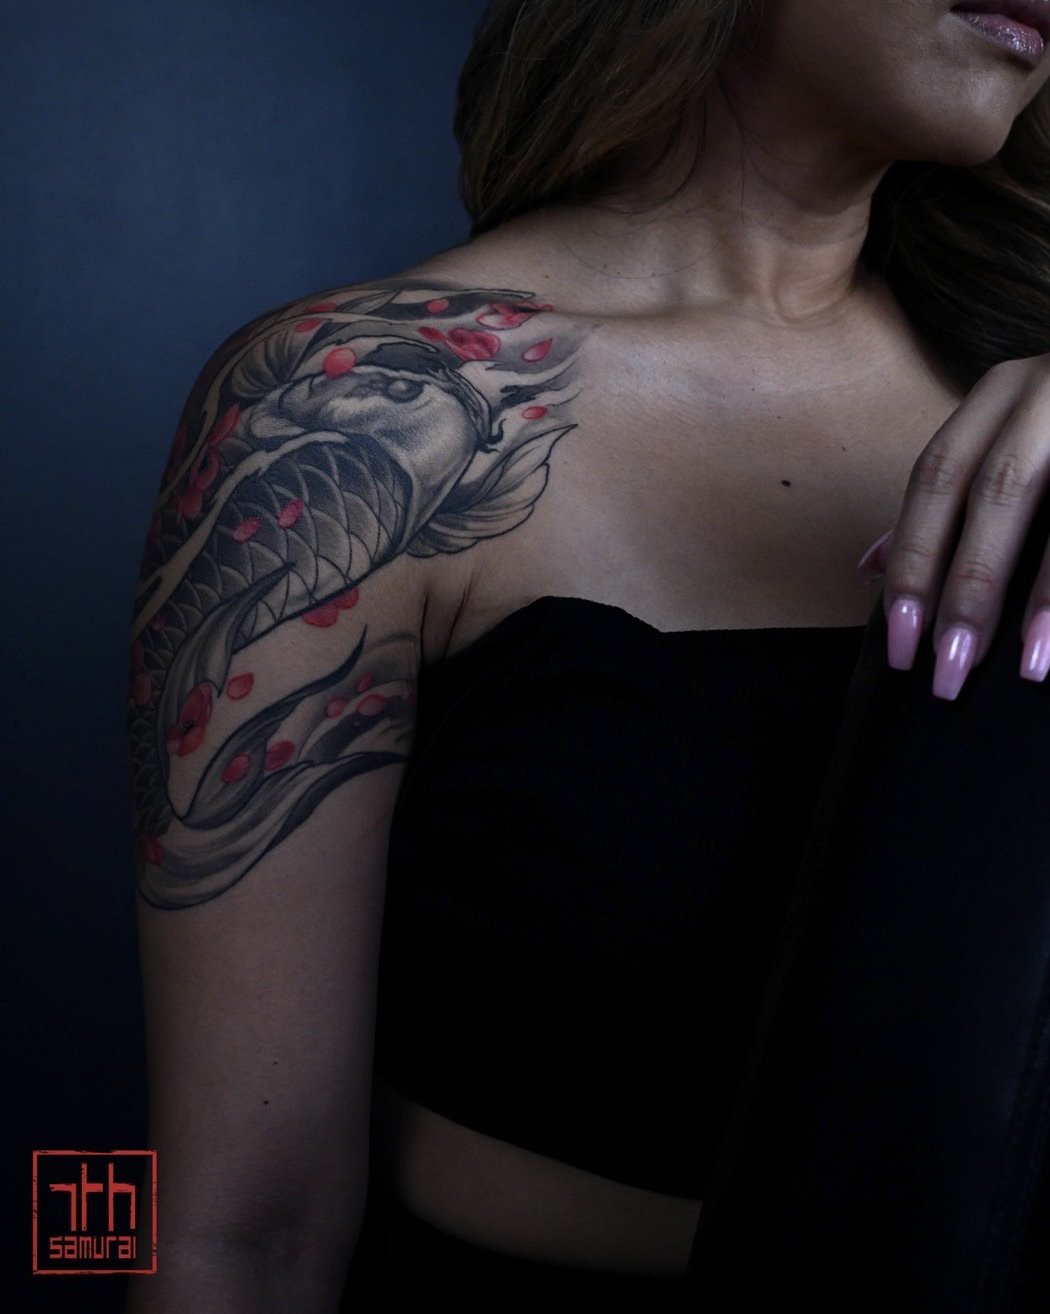 Koi + cherry blossoms  Women's half sleeve neo japanese asian sleeve tattoo with red highlights  asian artist: Kai 7th Samurai. YEG Edmonton, Alberta, Canada 2023 best 2024 